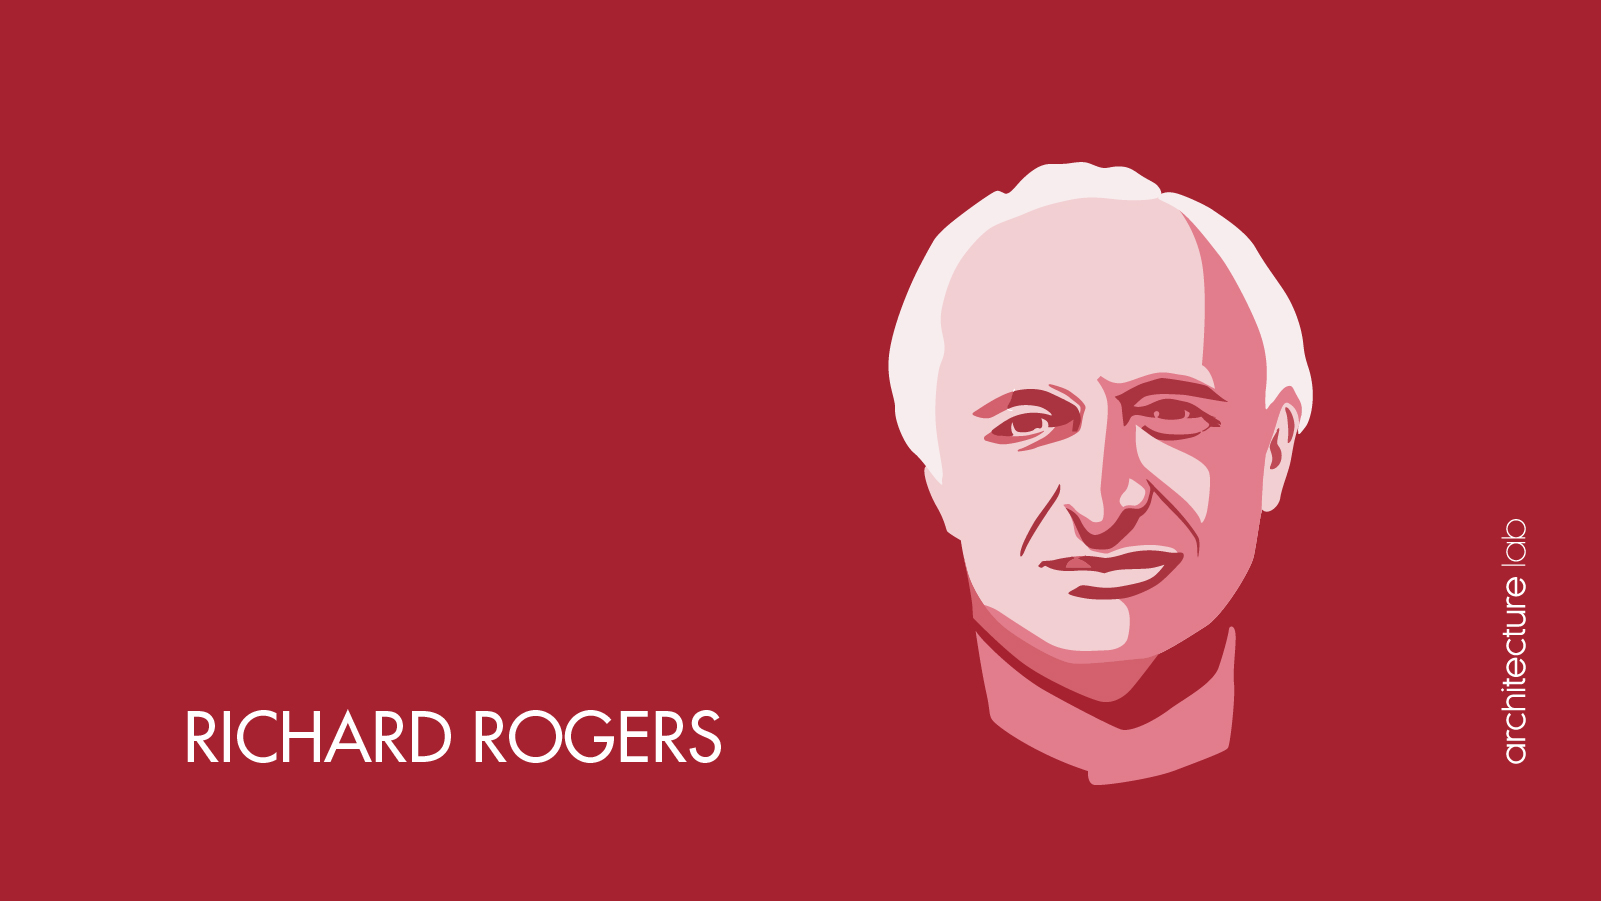 Richard rogers: biography, works, awards